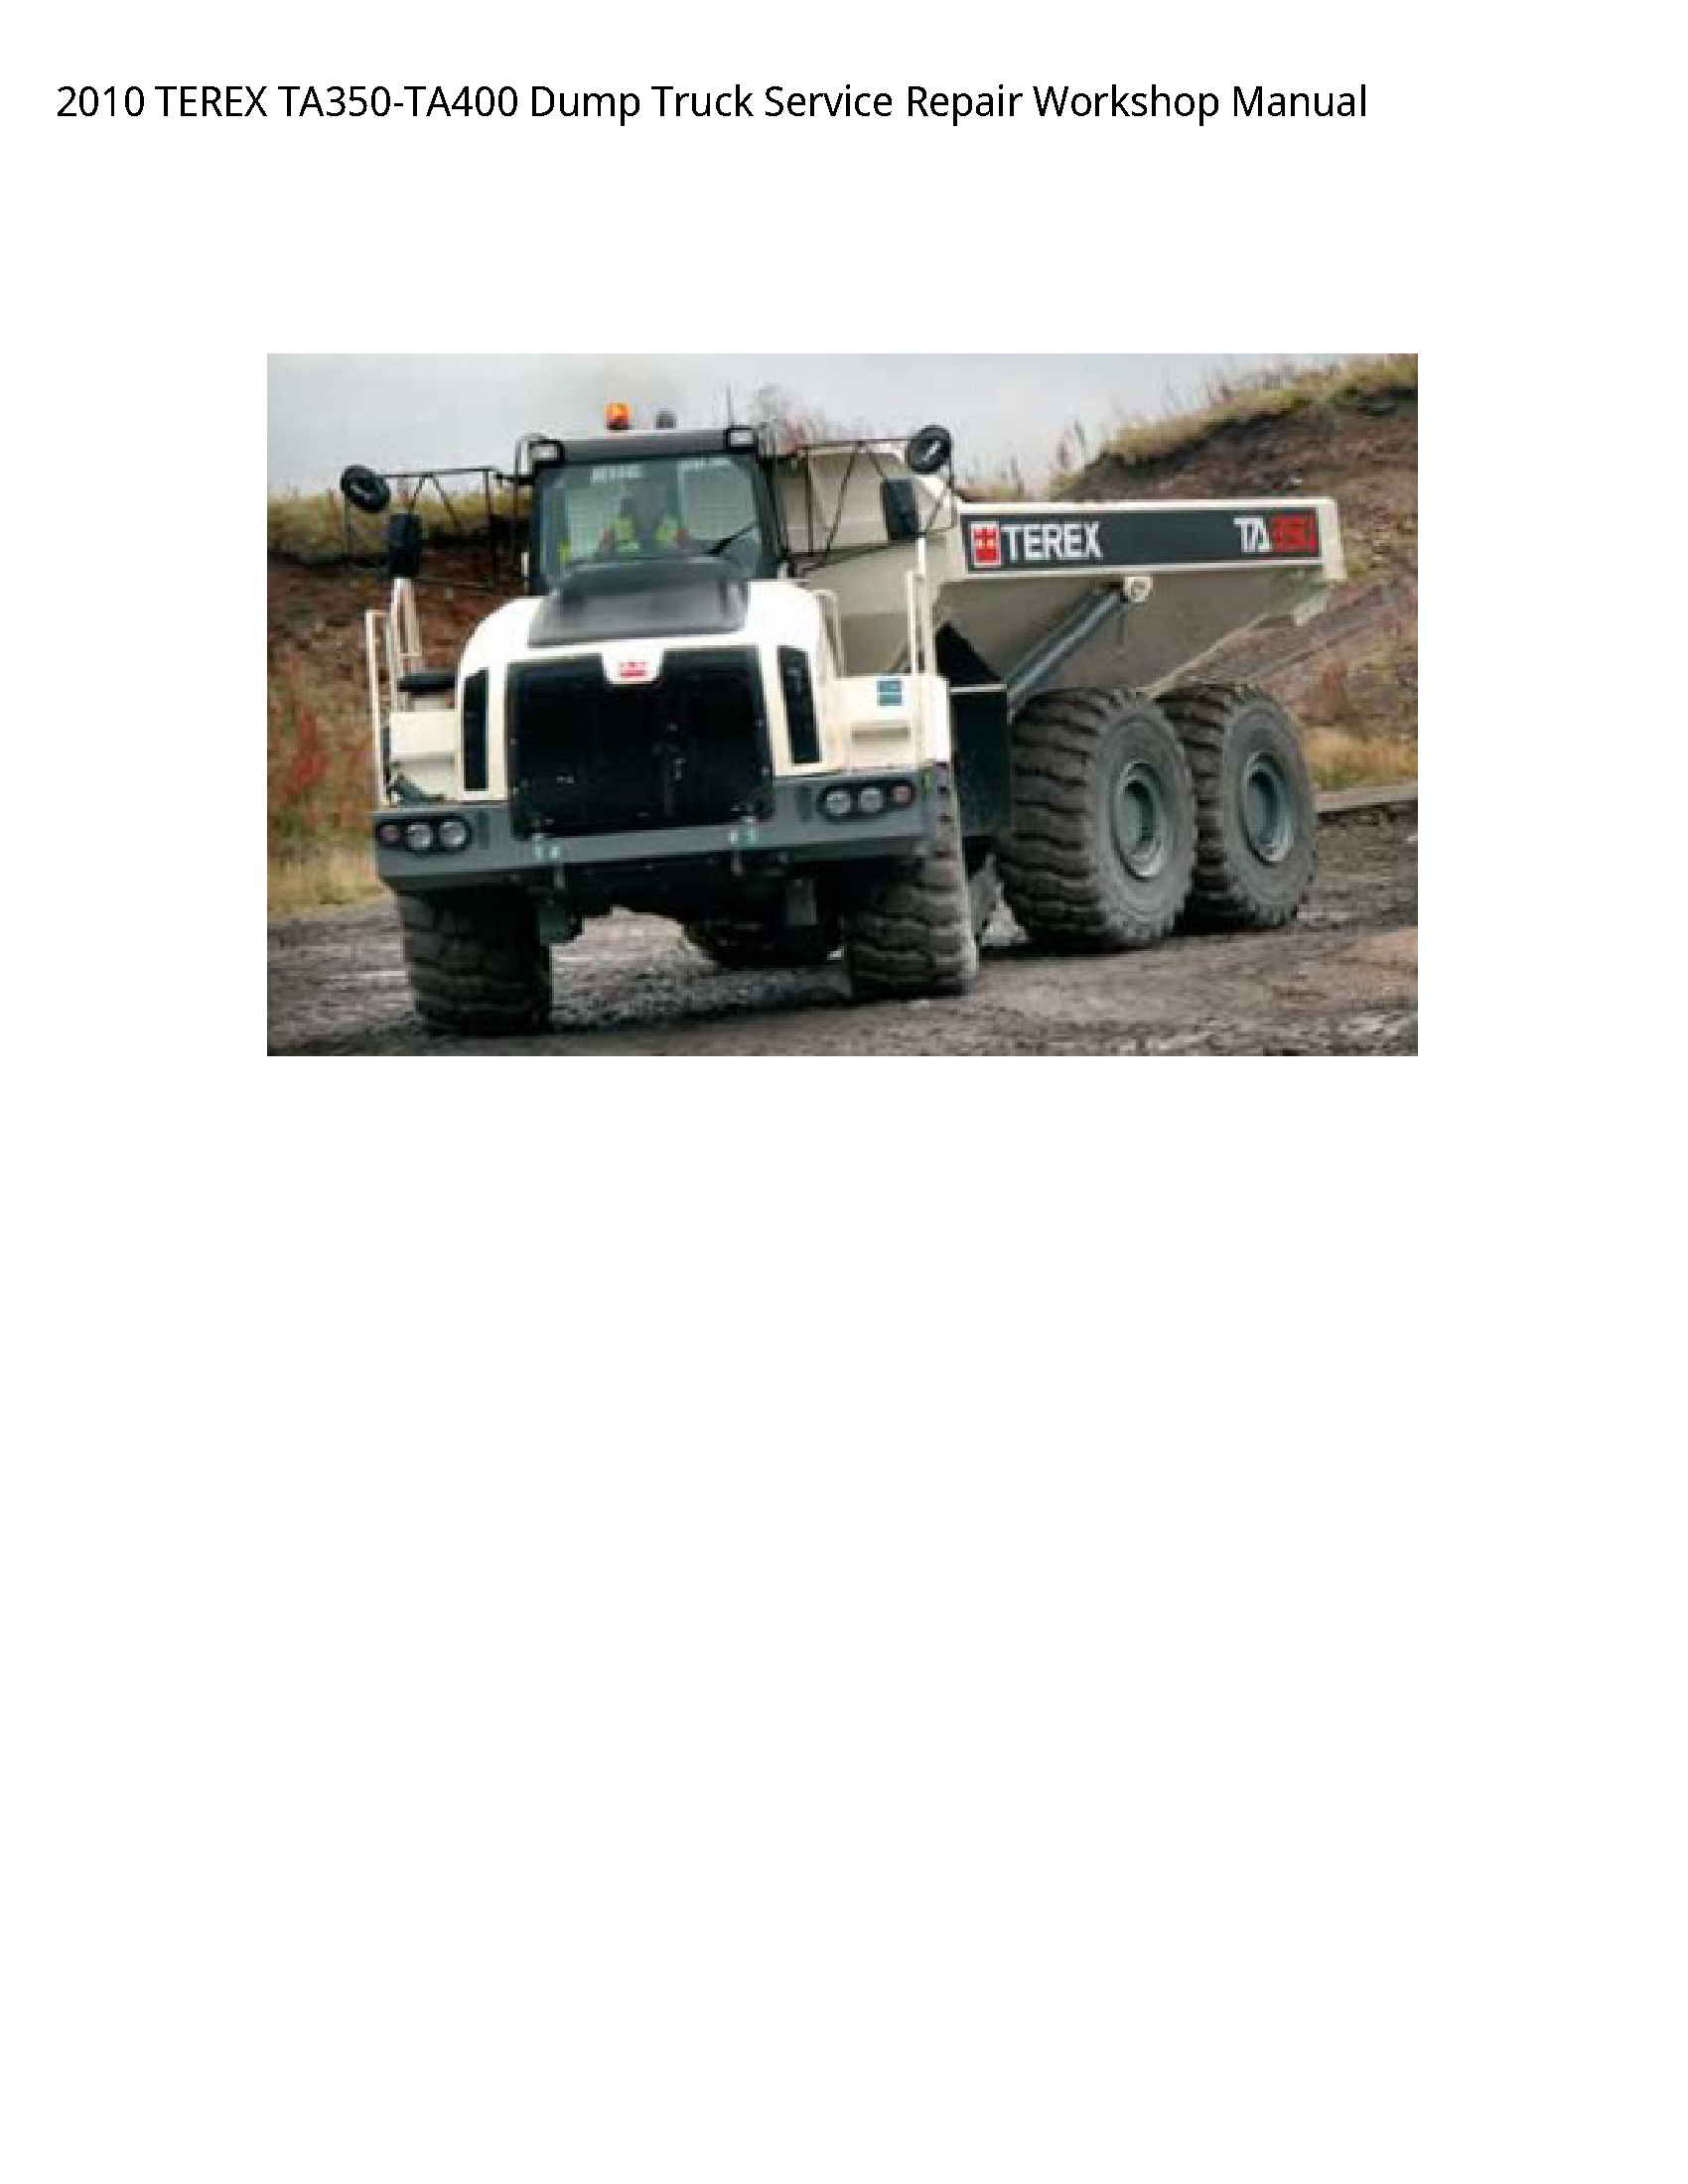 Terex TA350-TA400 Dump Truck manual